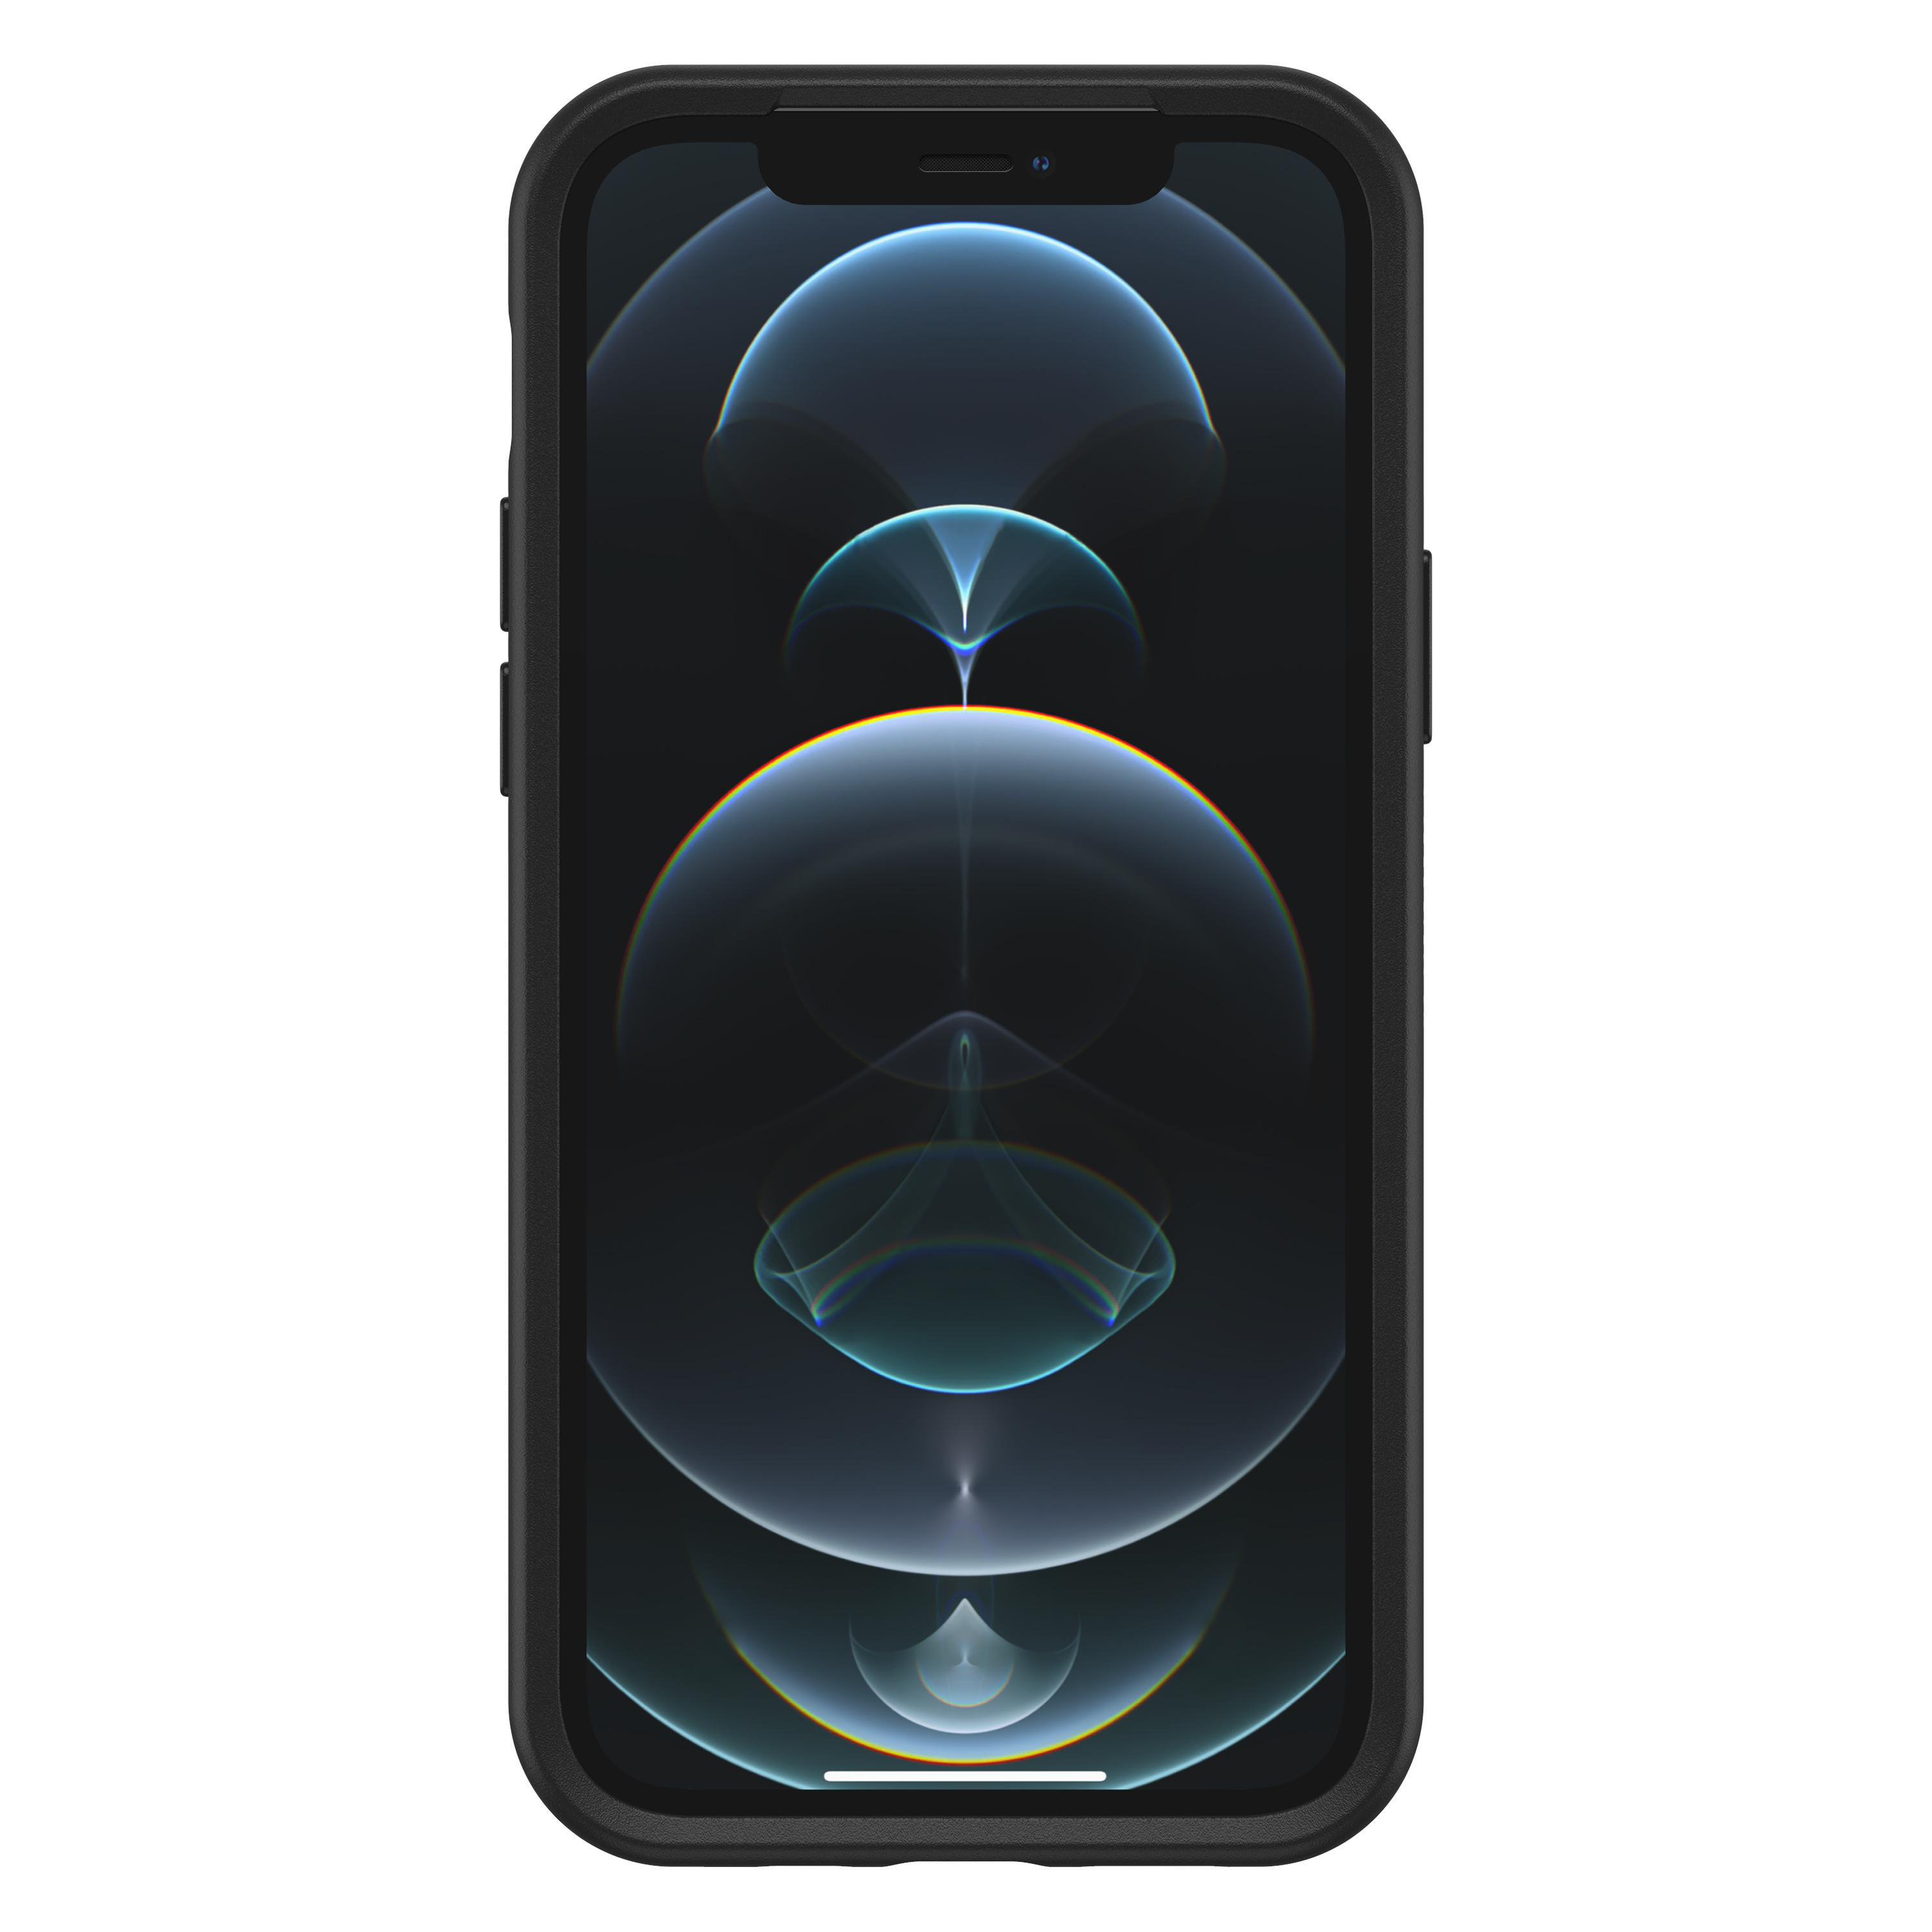 OTTERBOX Symmetry , Backcover, iPhone iPhone 12 Pro, Apple, 12, Schwarz